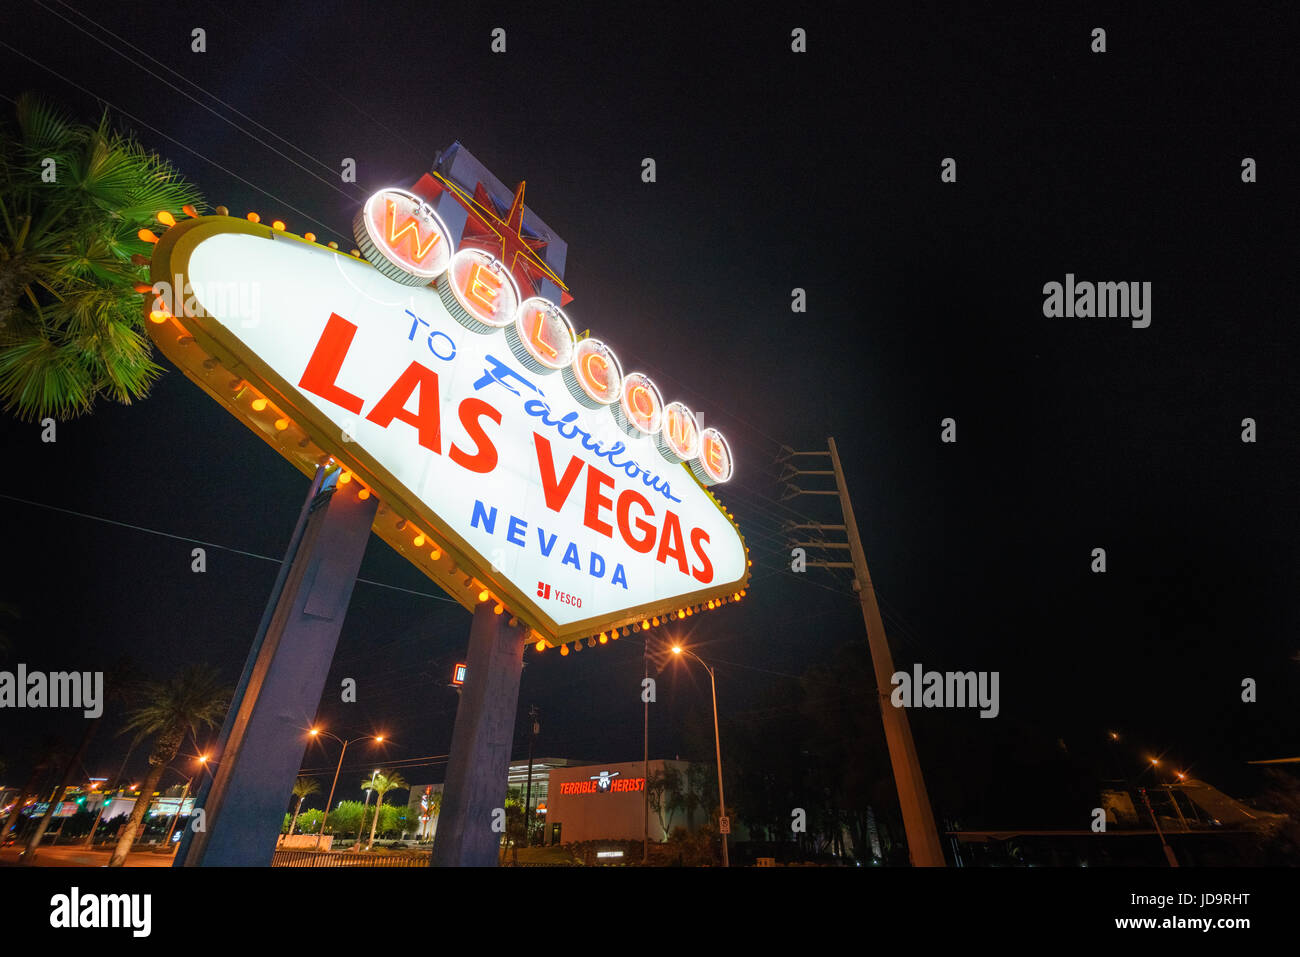 Iconic Welcome to Las Vegas sign illuminated at night, Nevada, USA. Stock Photo